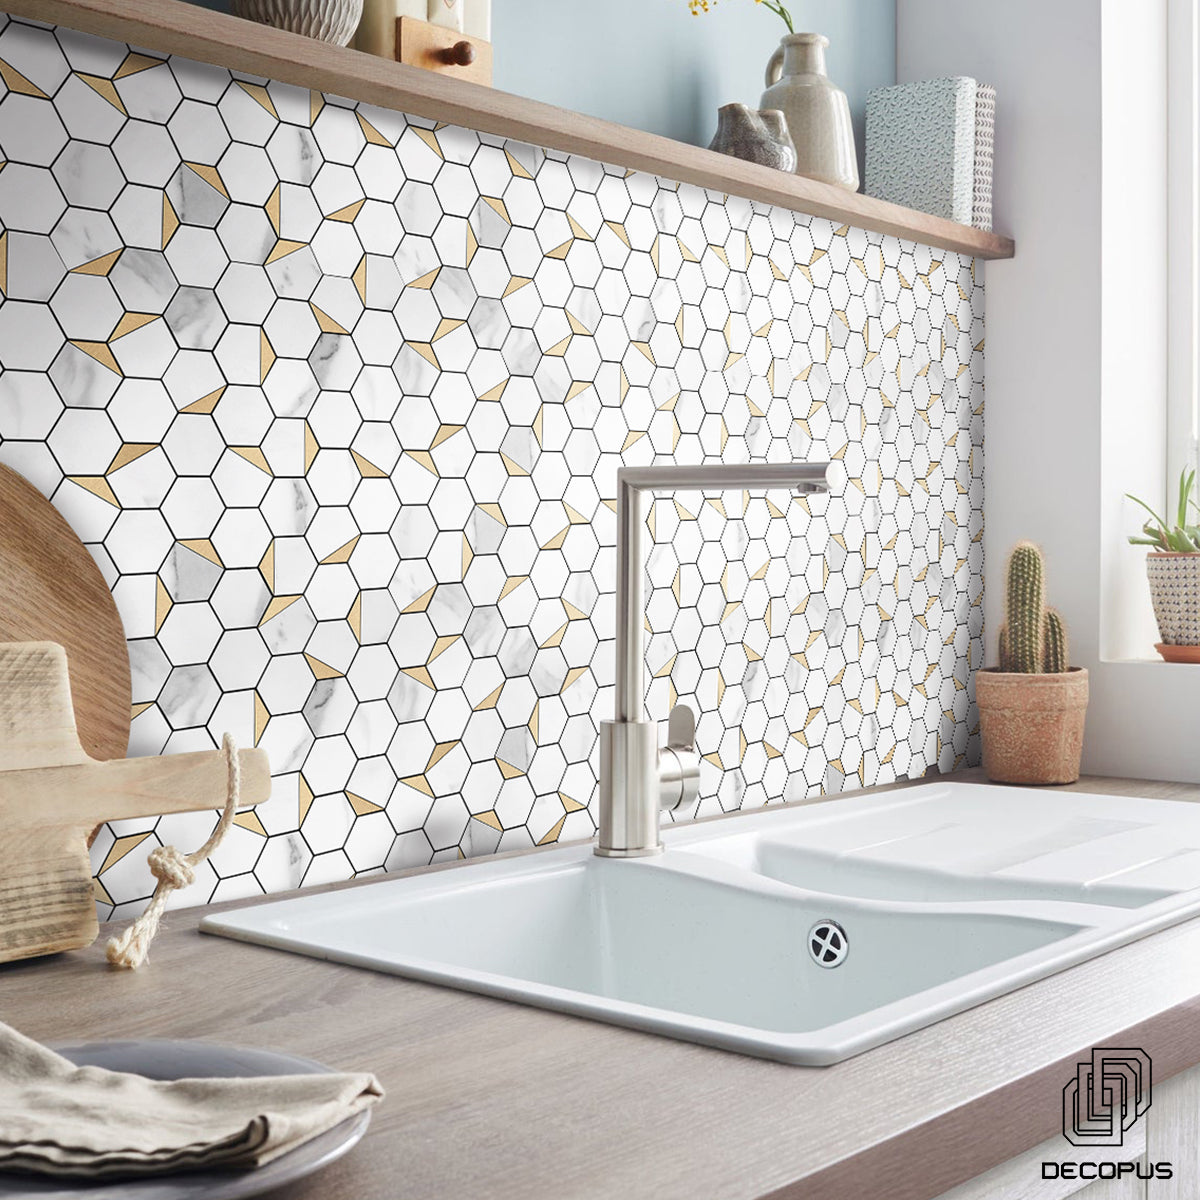 Decopus Faux Tile Peel and Stick Mosaic Tile Metal (Hexagon White Marble Gold Rim, 5pk) for Kitchen Backsplash, Bathroom Tile Self Adhesive